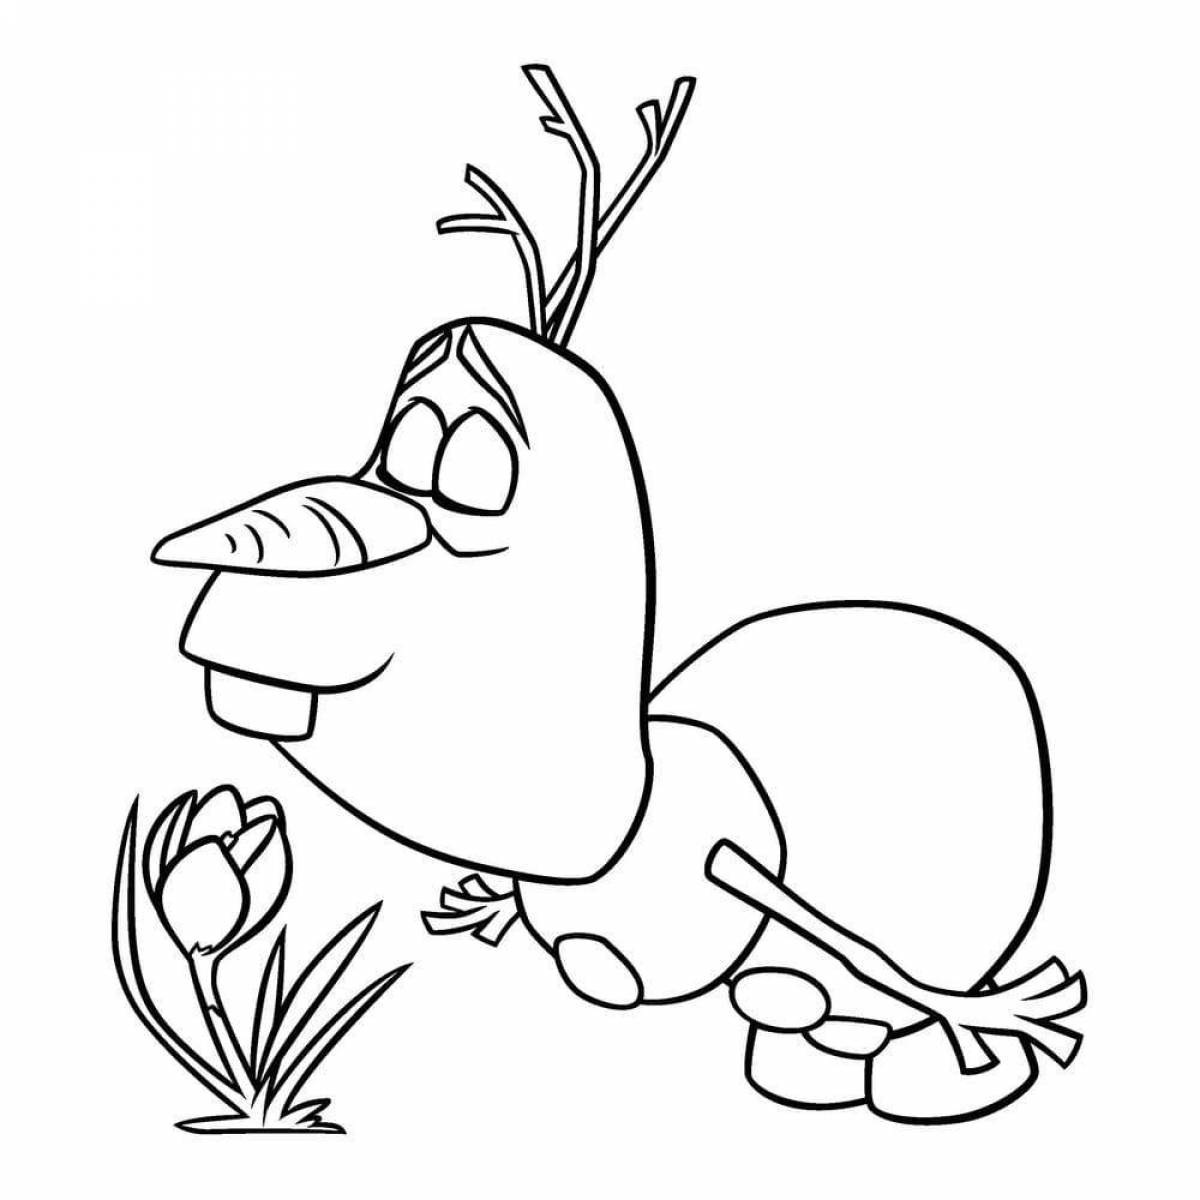 Olaf humorous coloring book